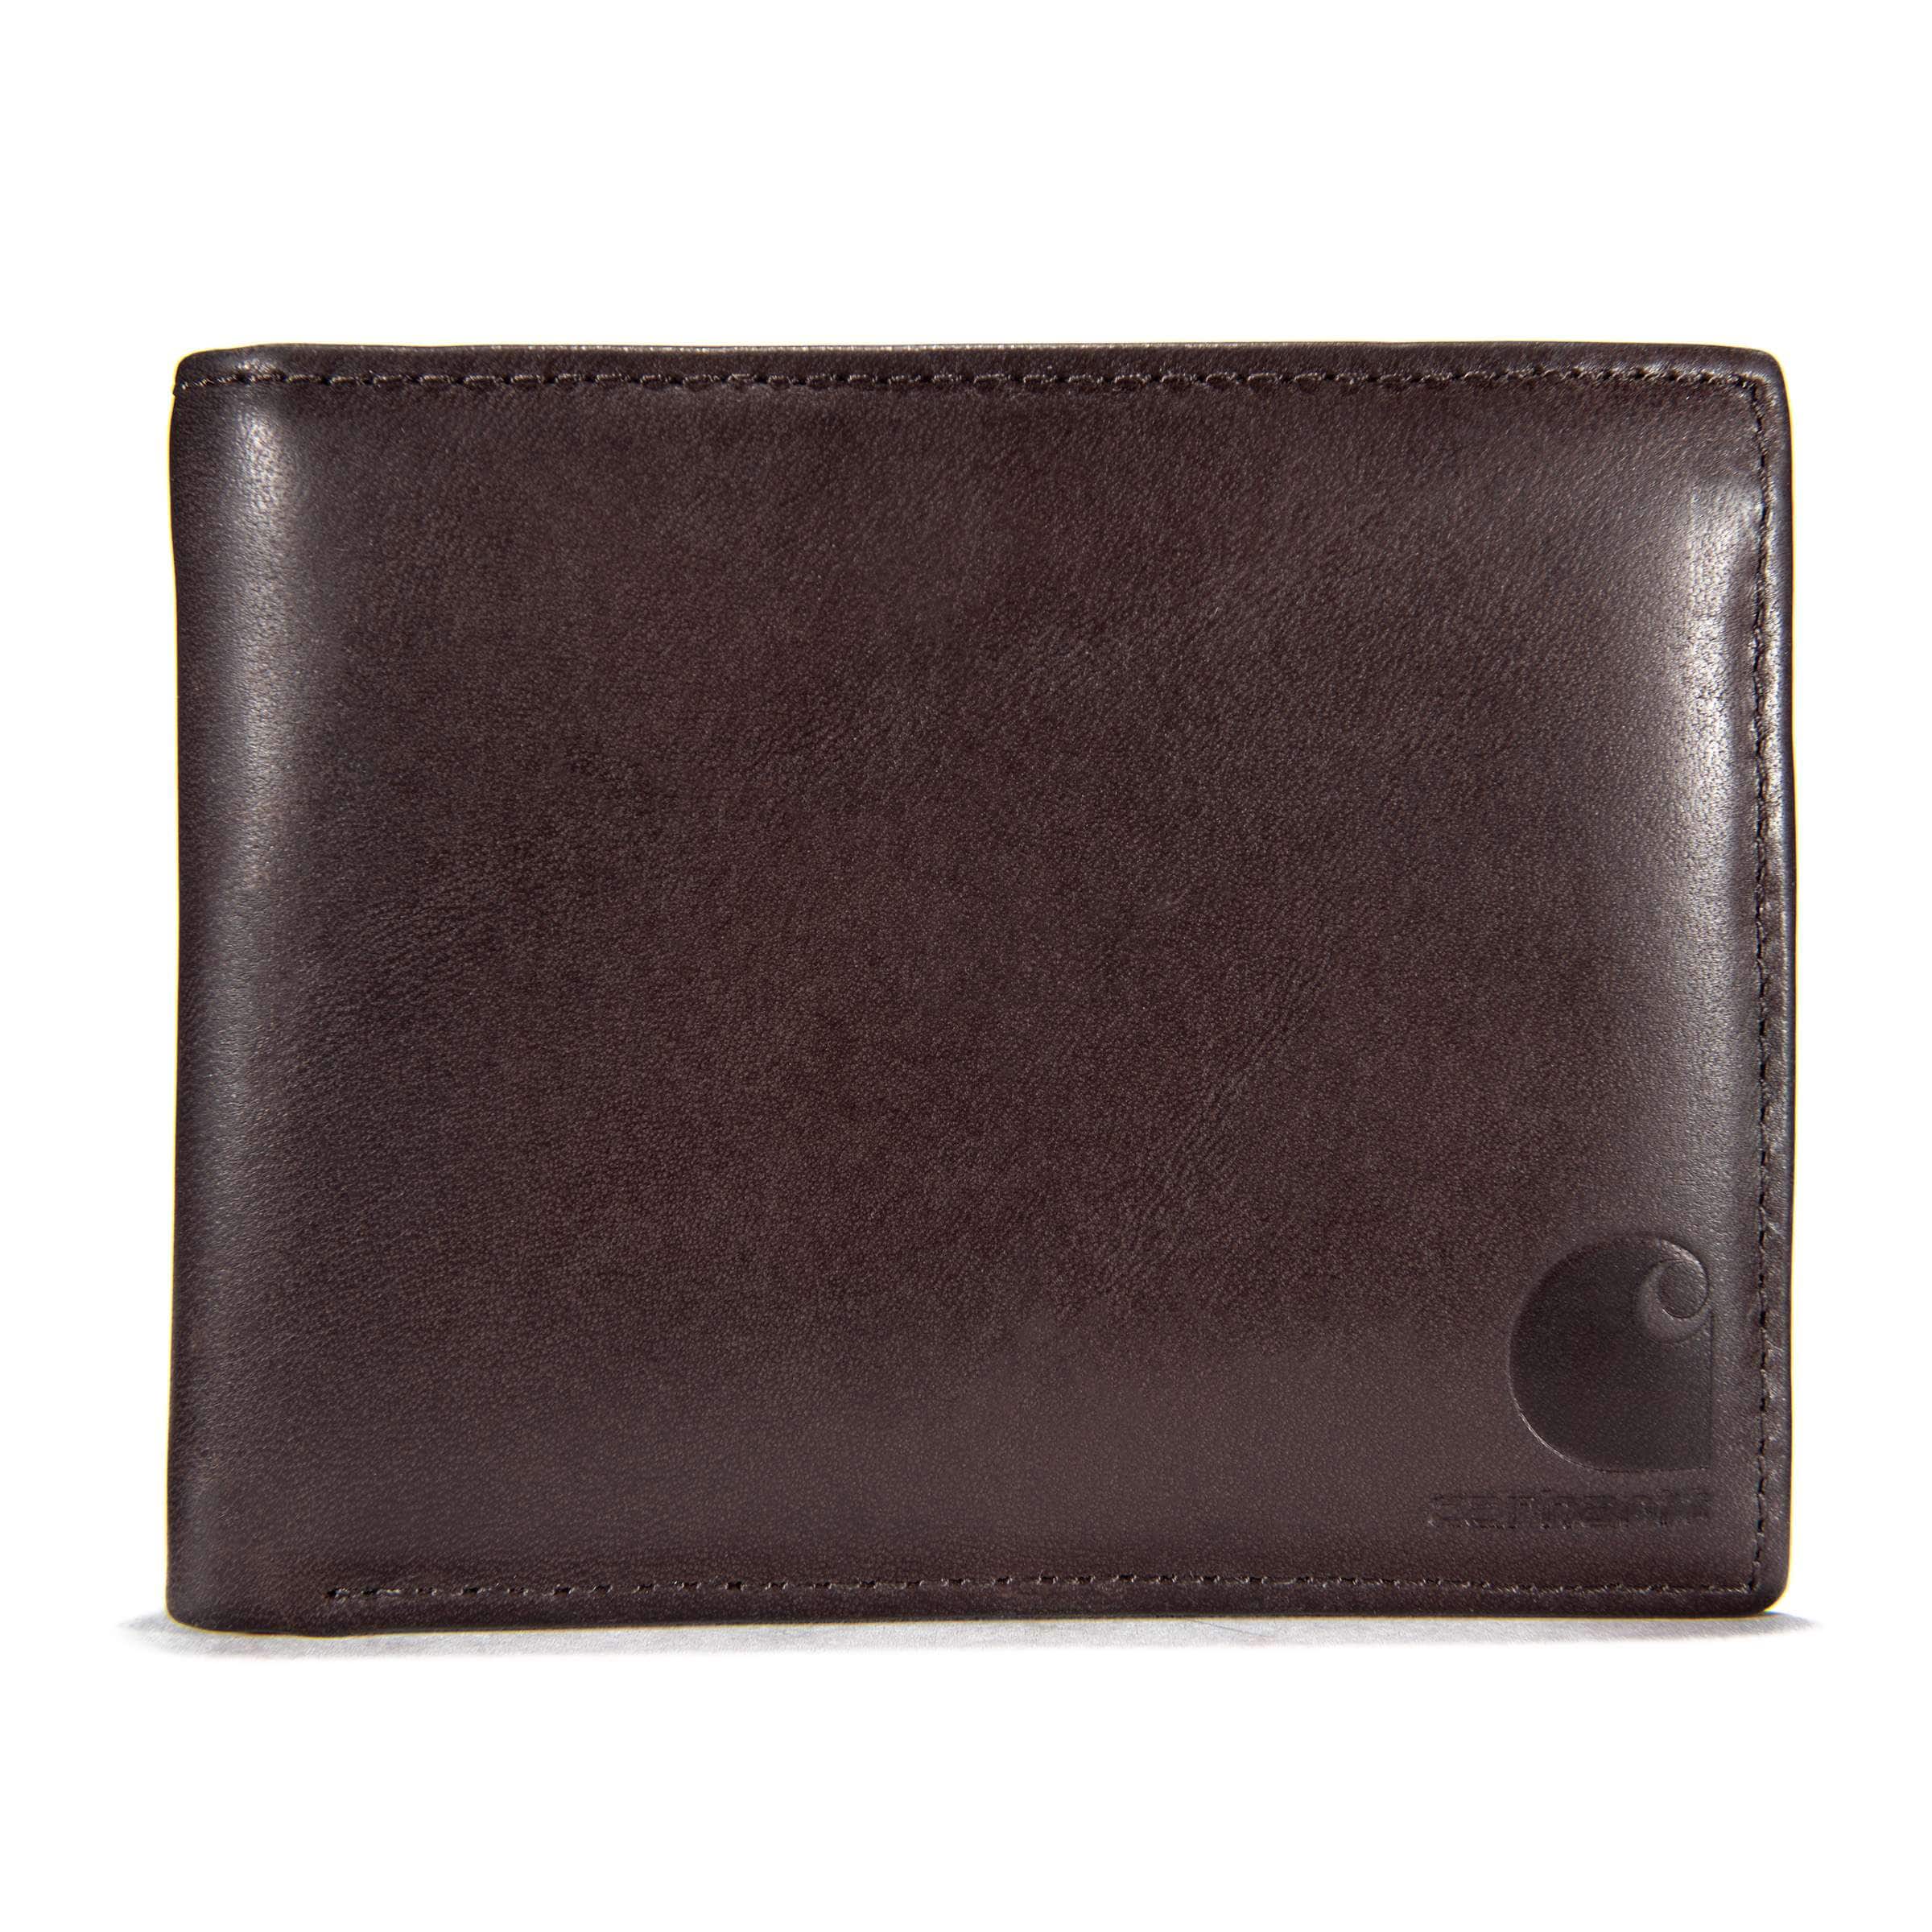 Carhartt Men's Nylon Duck Crossbody Wallet, Brown